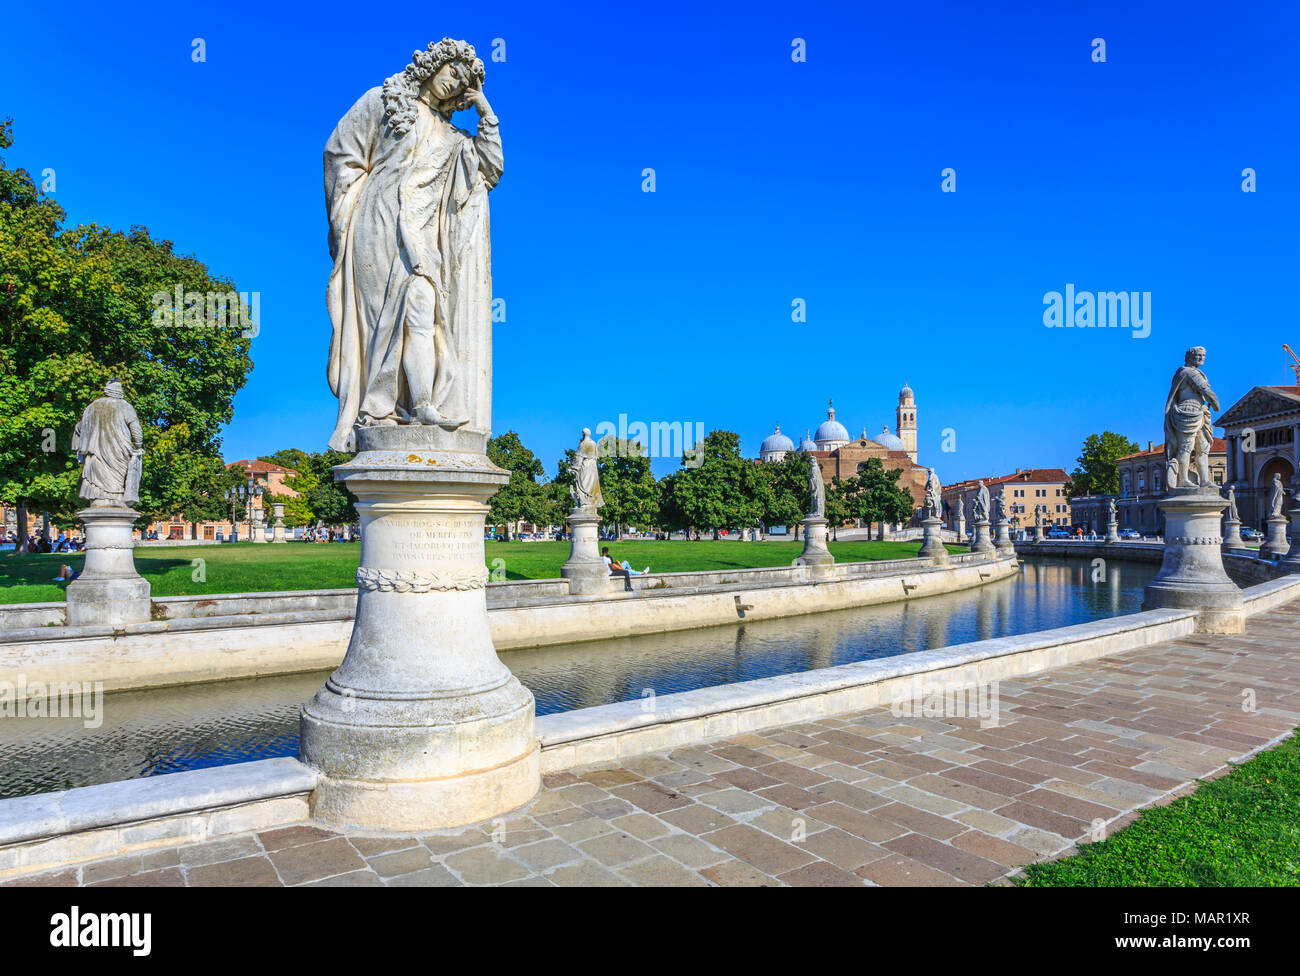 View of statues in Prato della Valle and Santa Giustina Basilica visible in background, Padua, Veneto, Italy, Europe Stock Photo